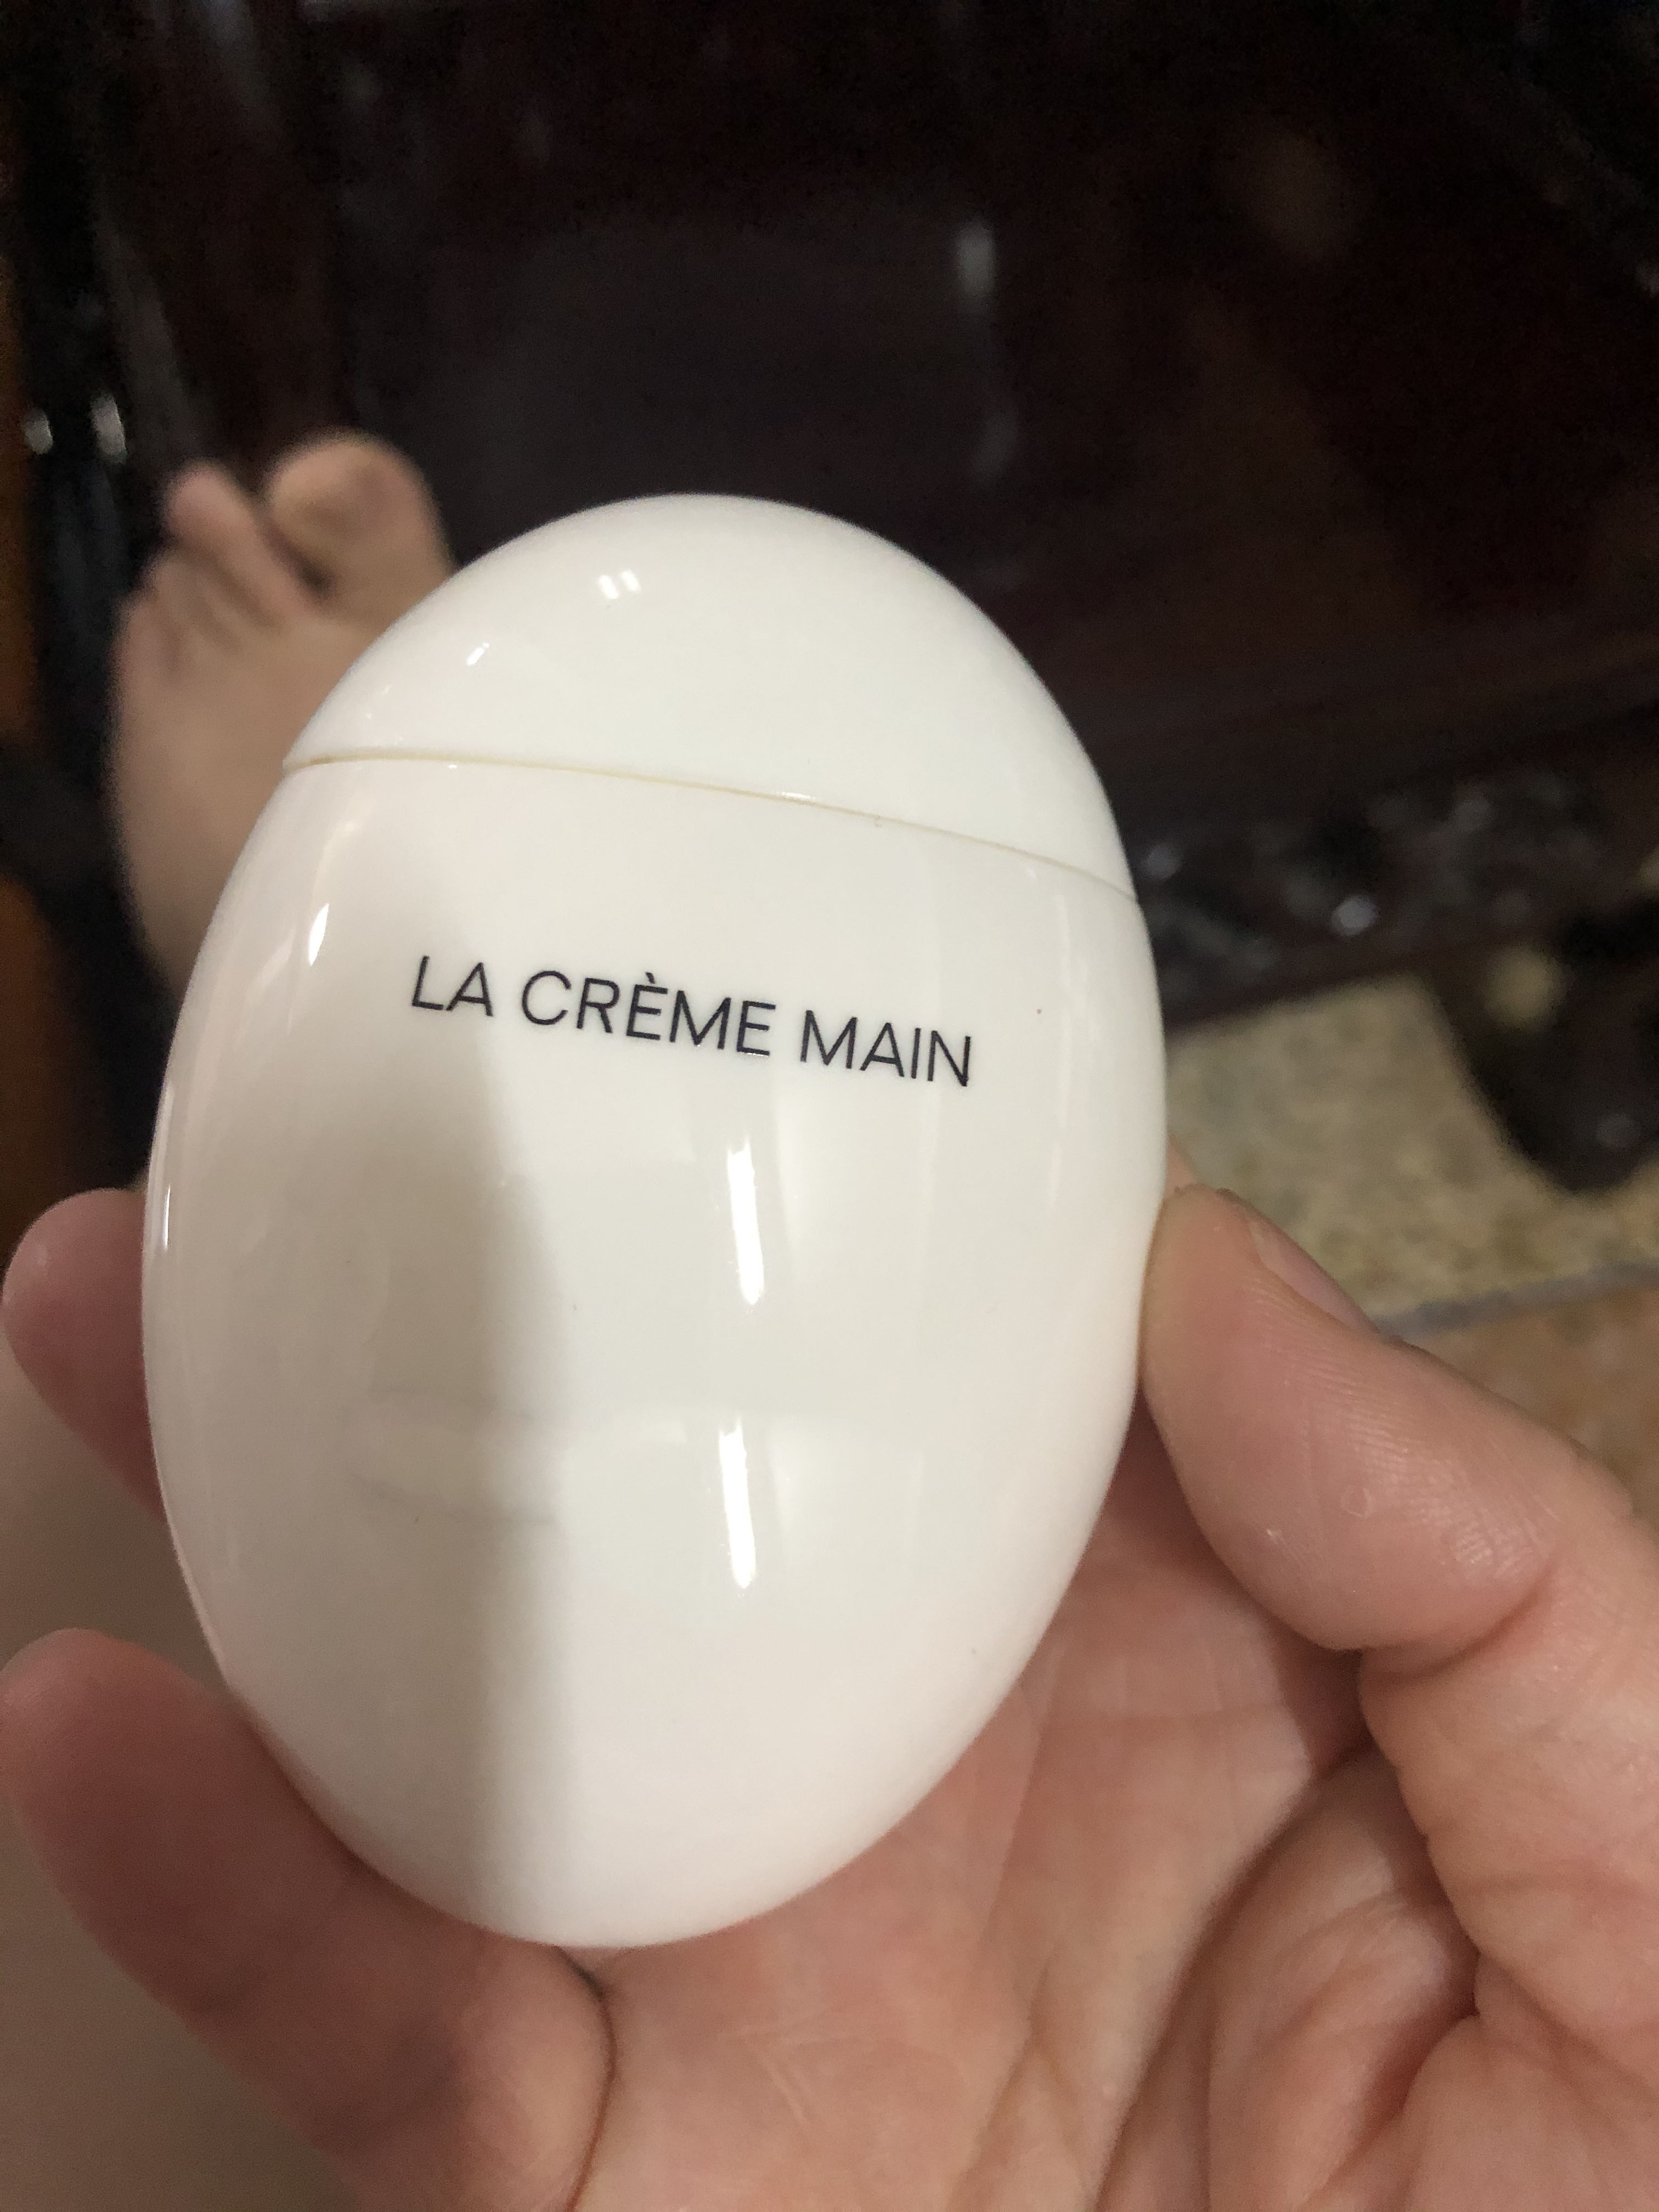 marca famosa LE LIFT creme para as mãos LA CREME MAIN clara de ovo preto creme para as mãos cuidados com a pele premierlash qualidade superior